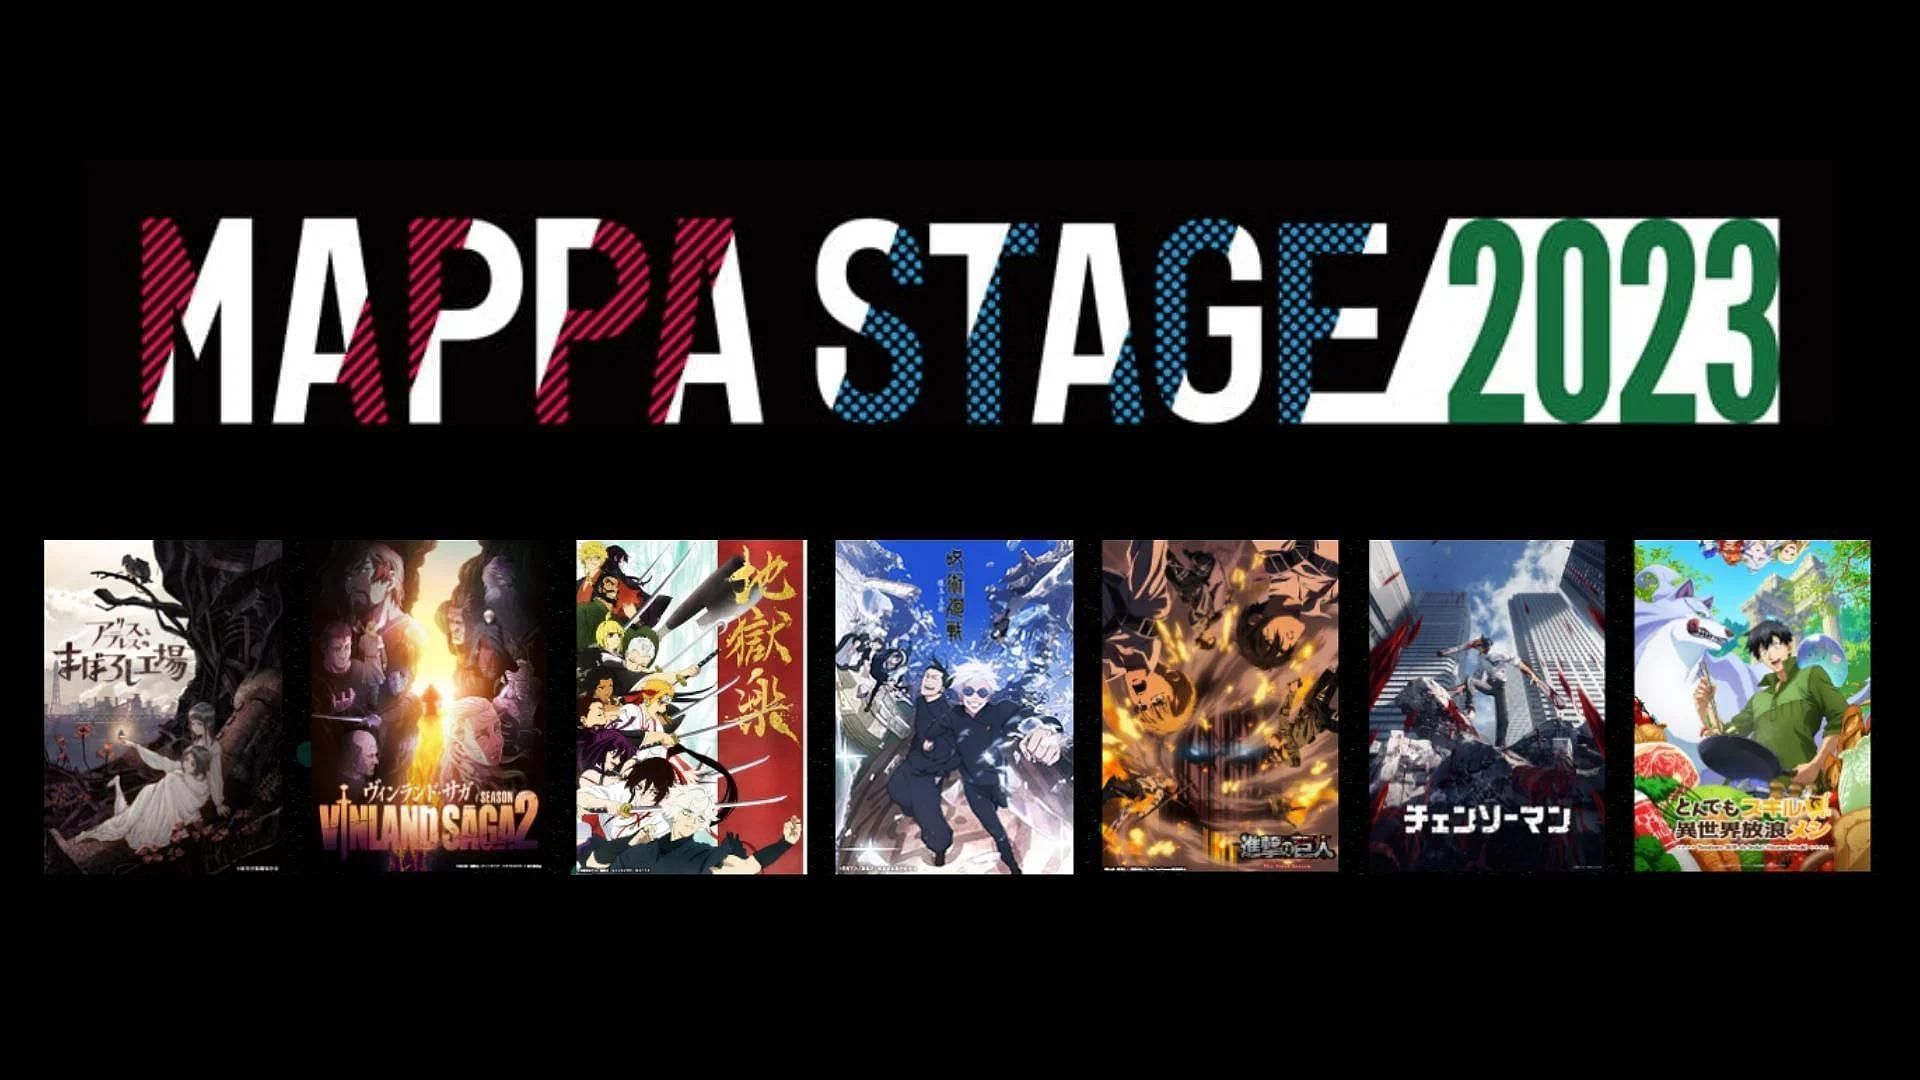 MAPPA Stage 2023 banner (Image via MAPPA)